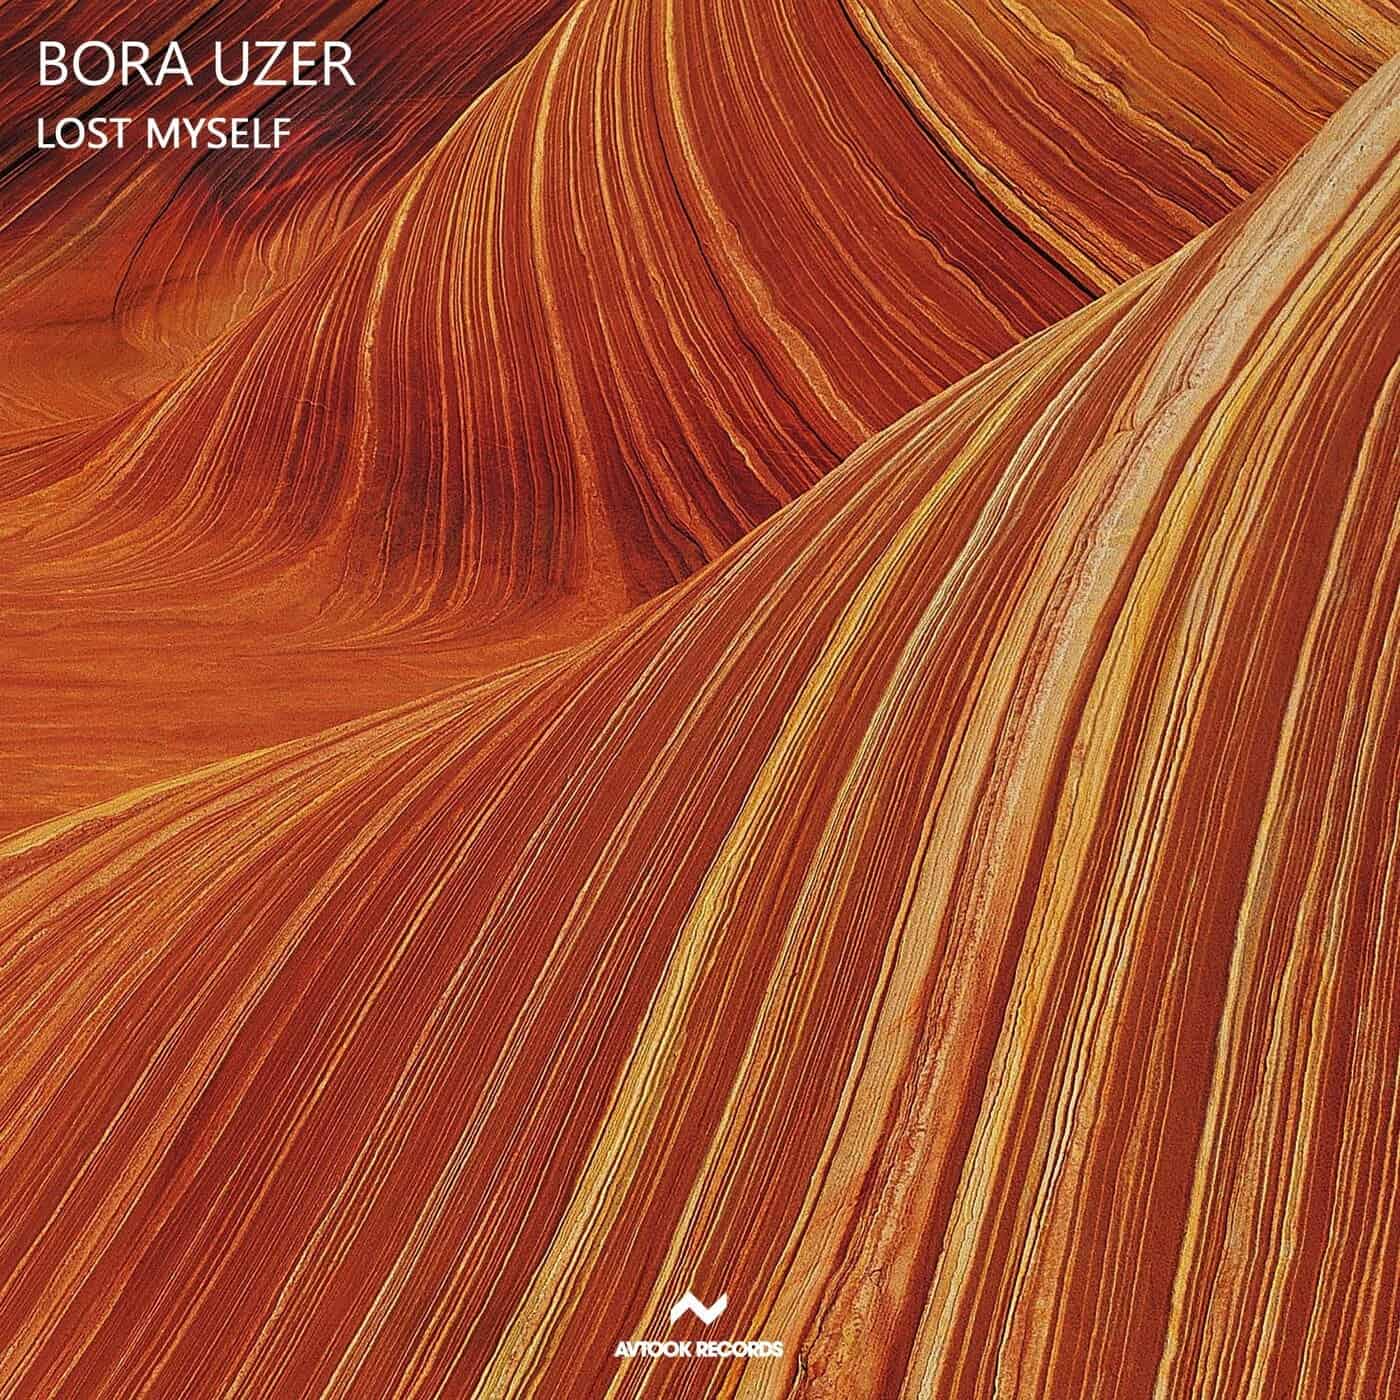 Download Bora Uzer - Lost Myself on Electrobuzz